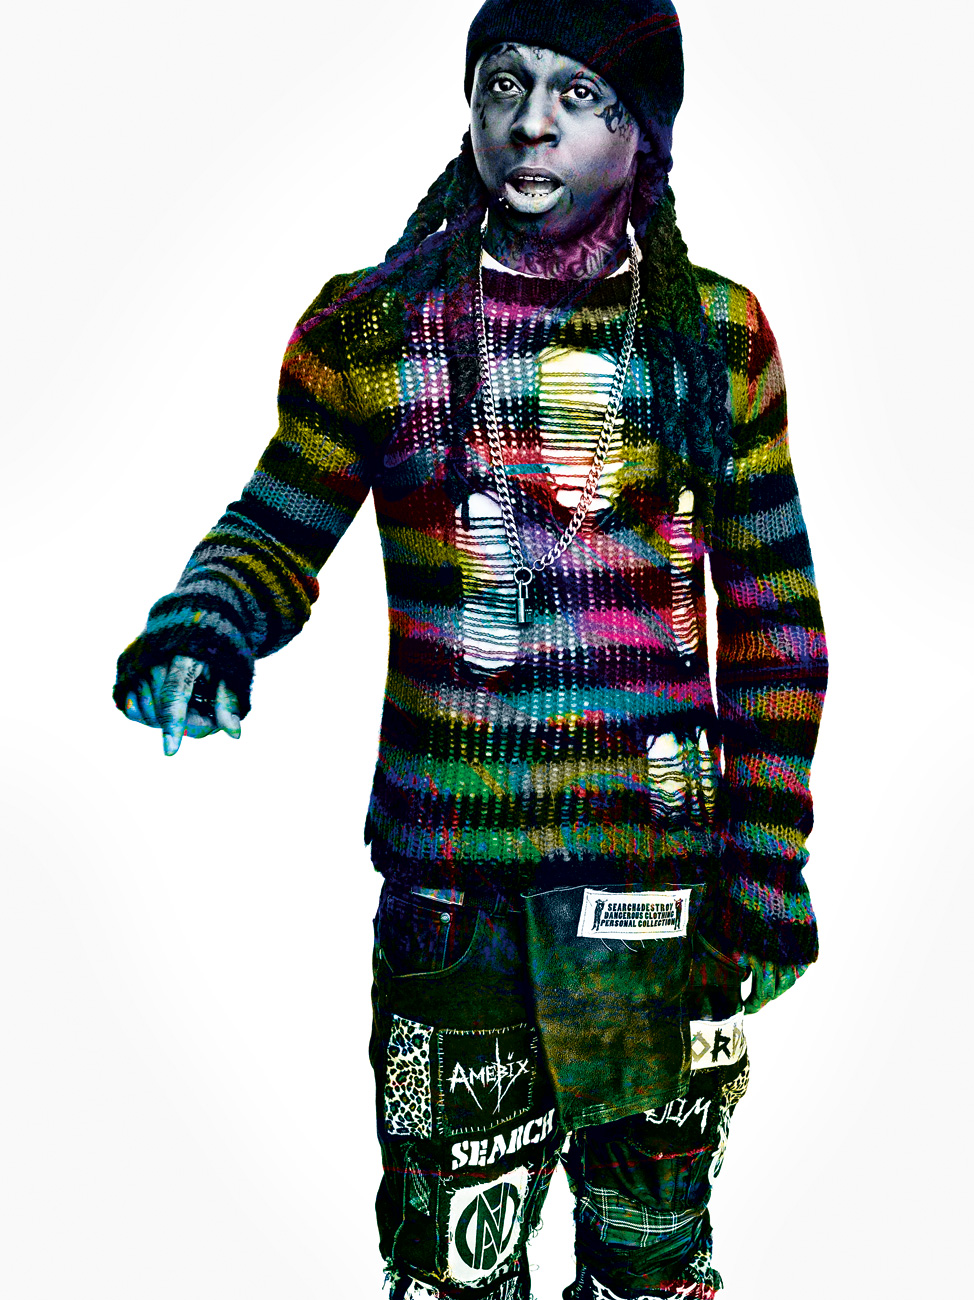 Lil Wayne - Interview Magazine